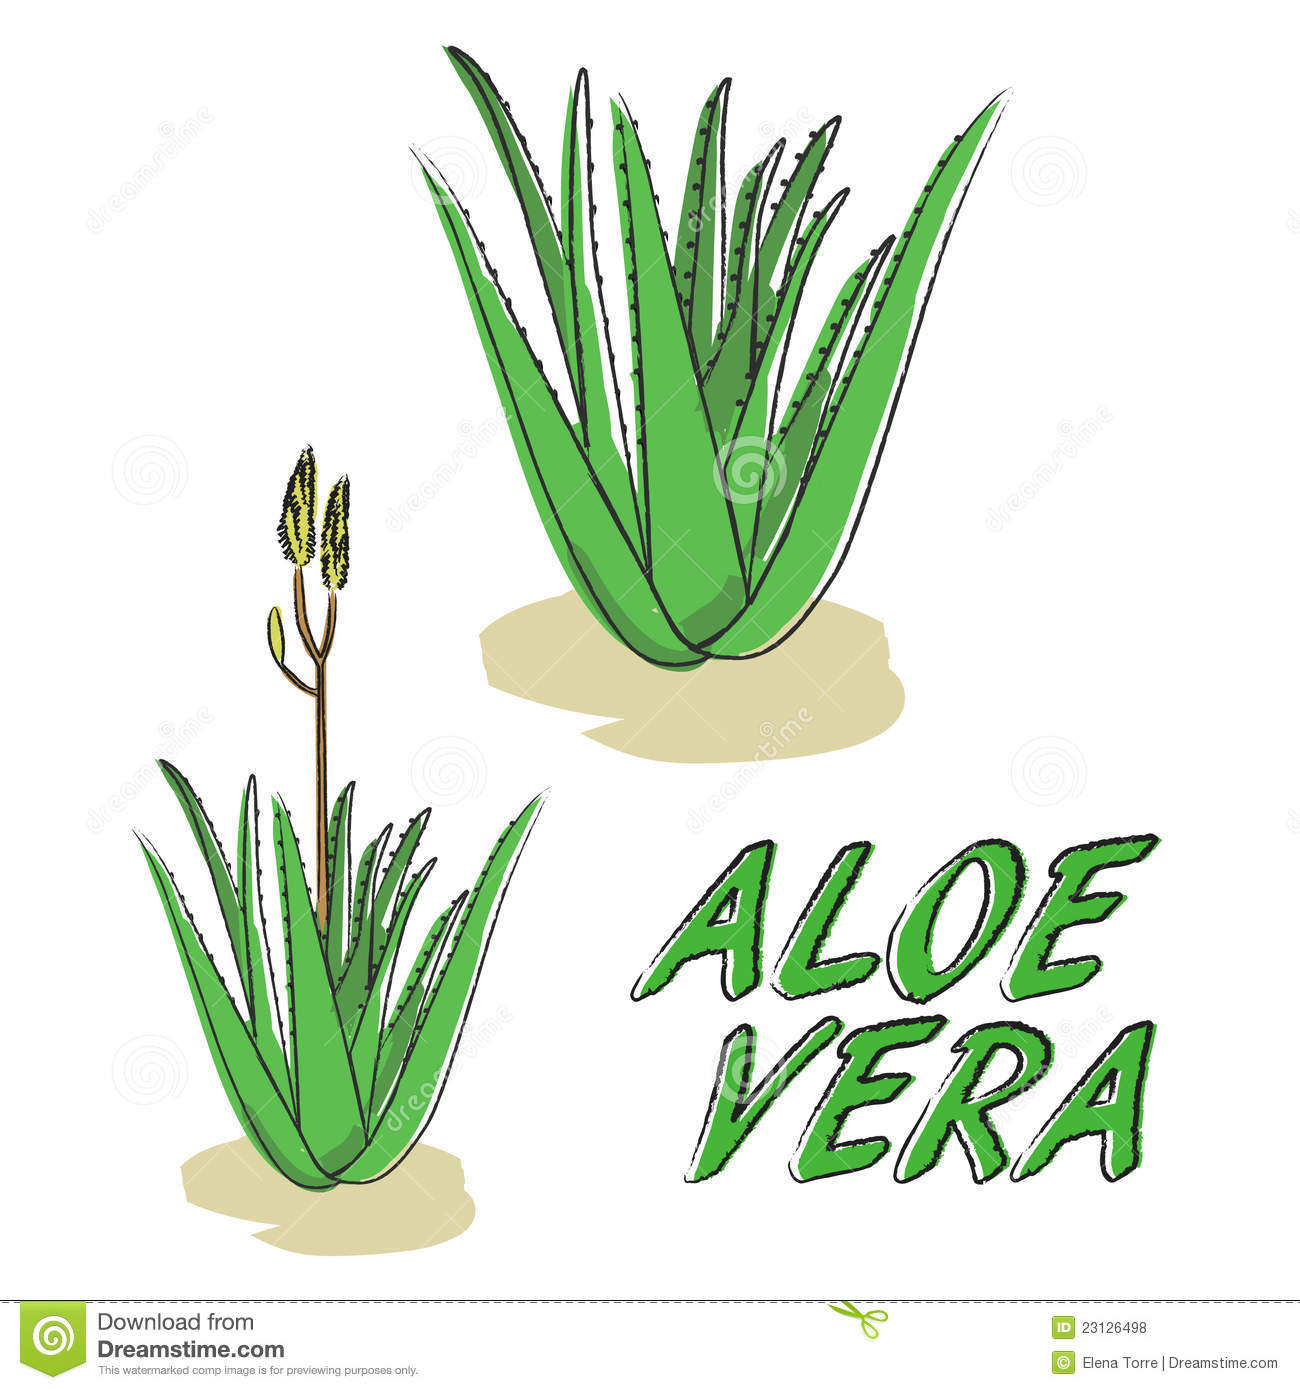 Aloe plant clipart.